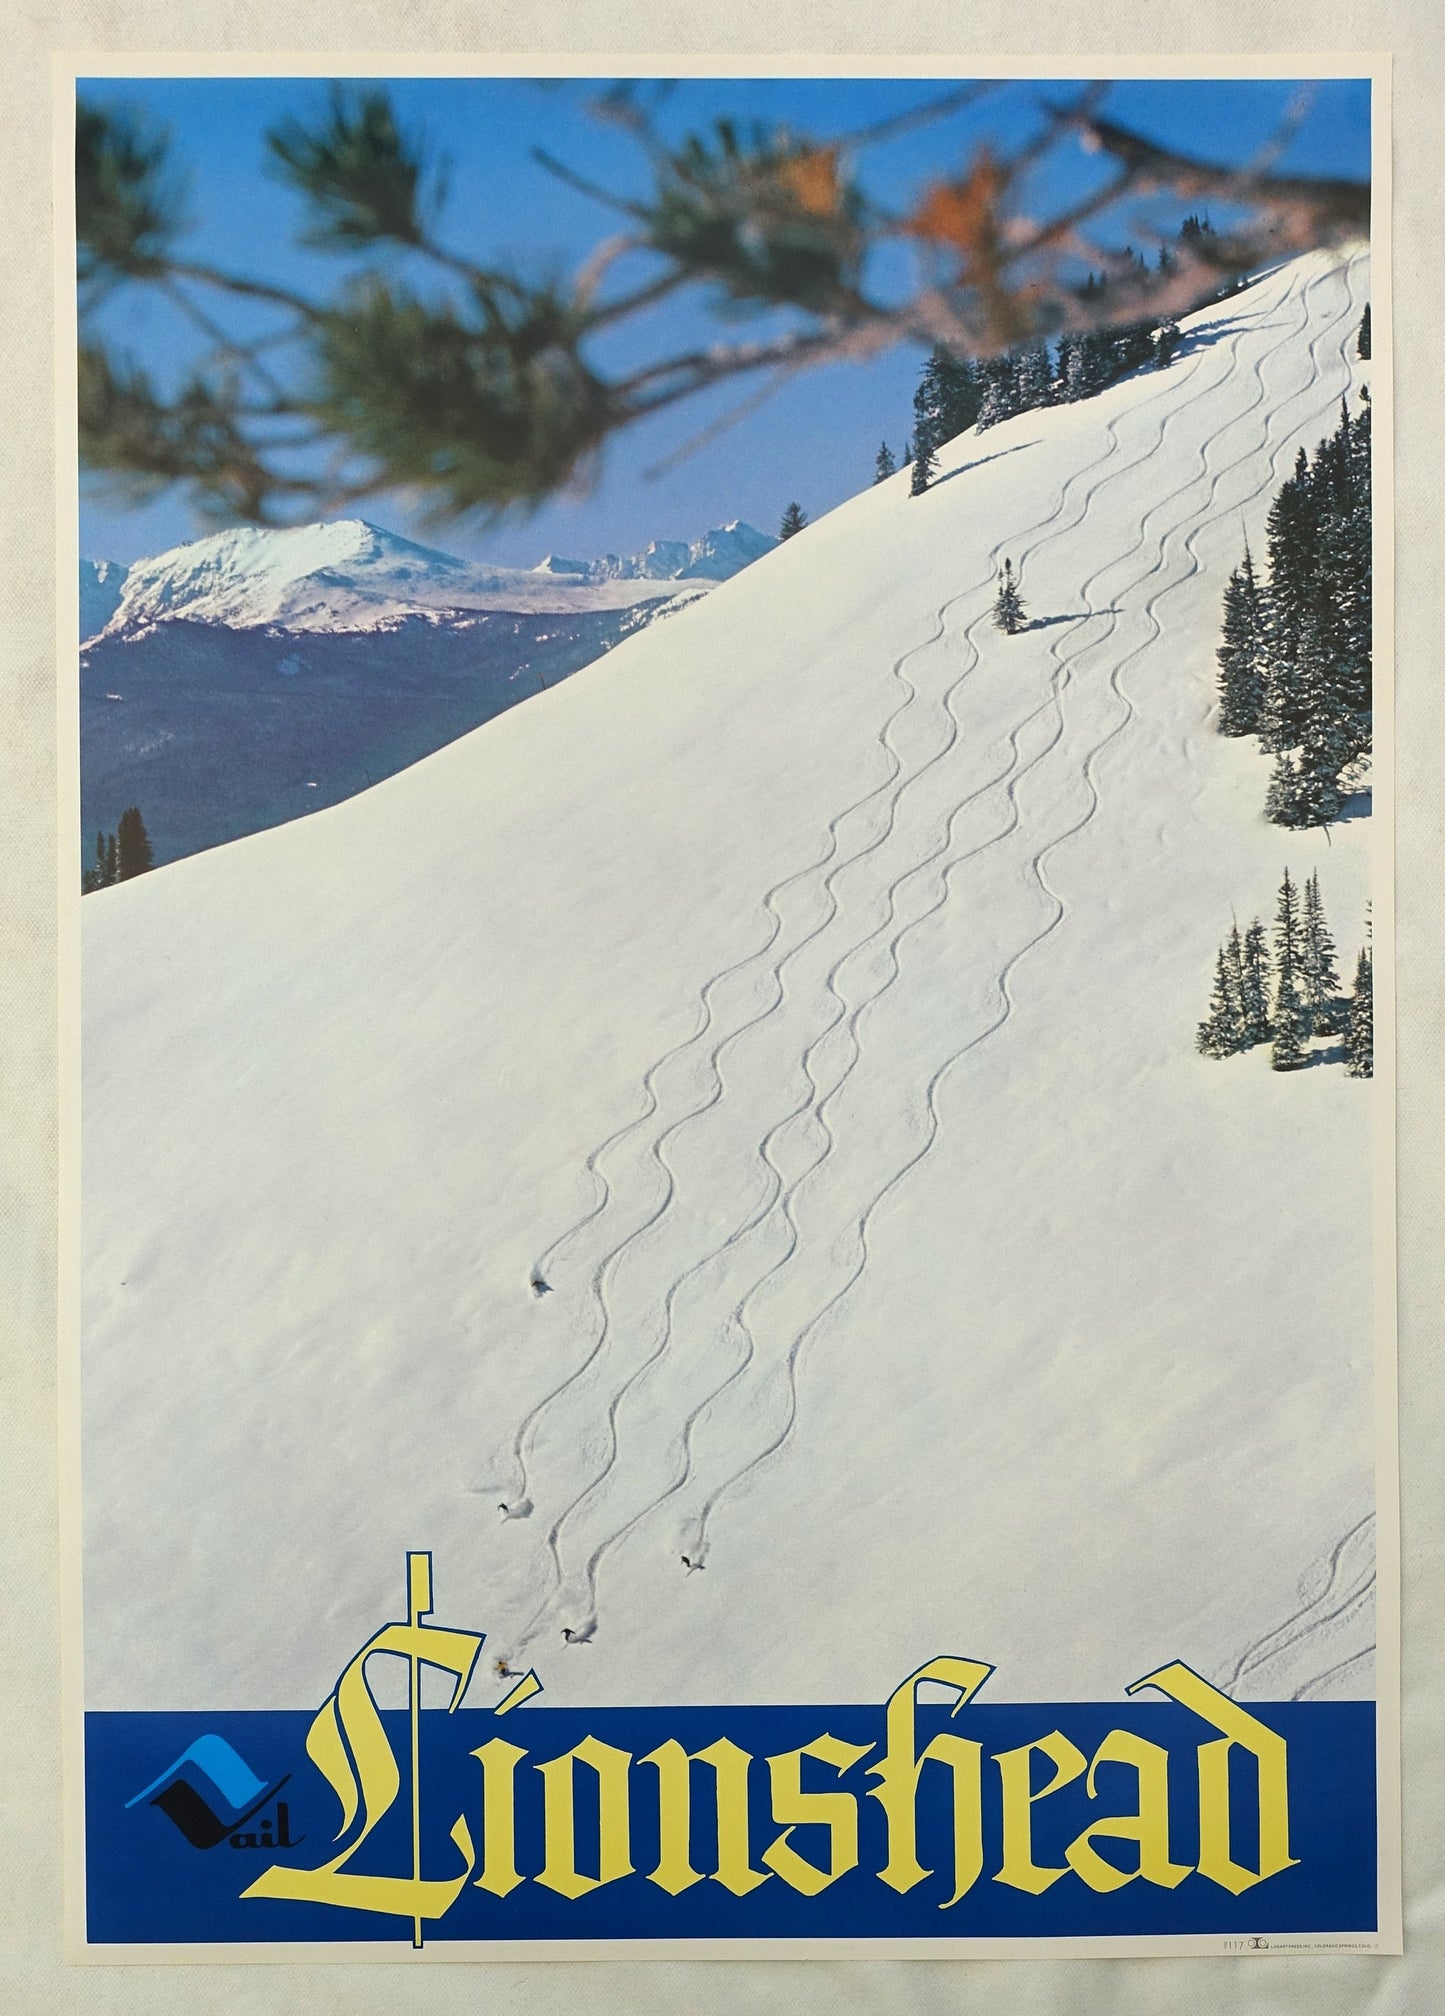 1960s Lionshead Colorado Skiing Travel Poster - Original Vintage Poster